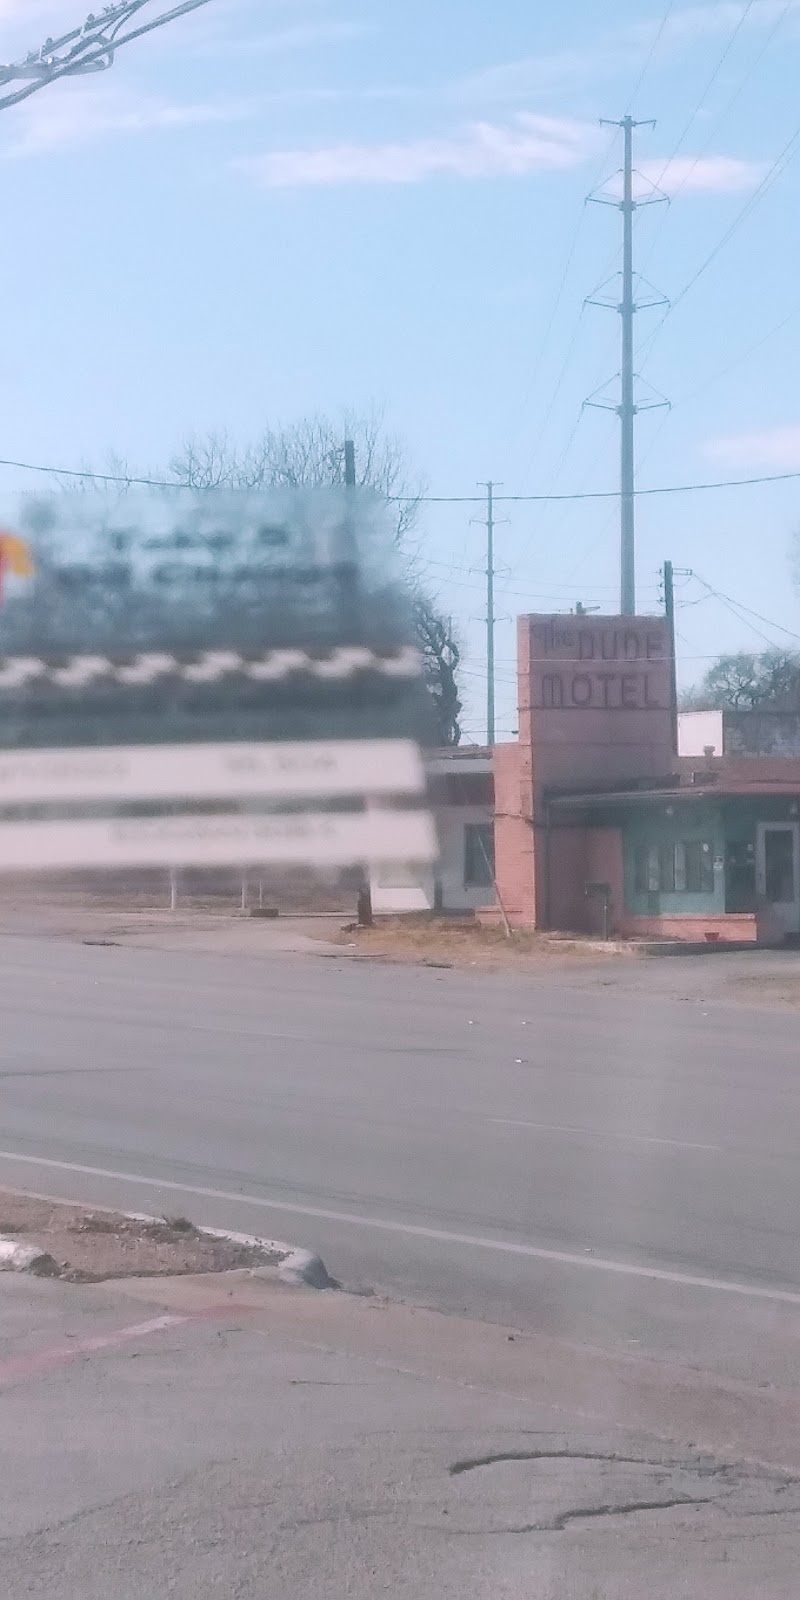 The Dude Motel | 5219 E Belknap St, Fort Worth, TX 76117, USA | Phone: (817) 831-0090